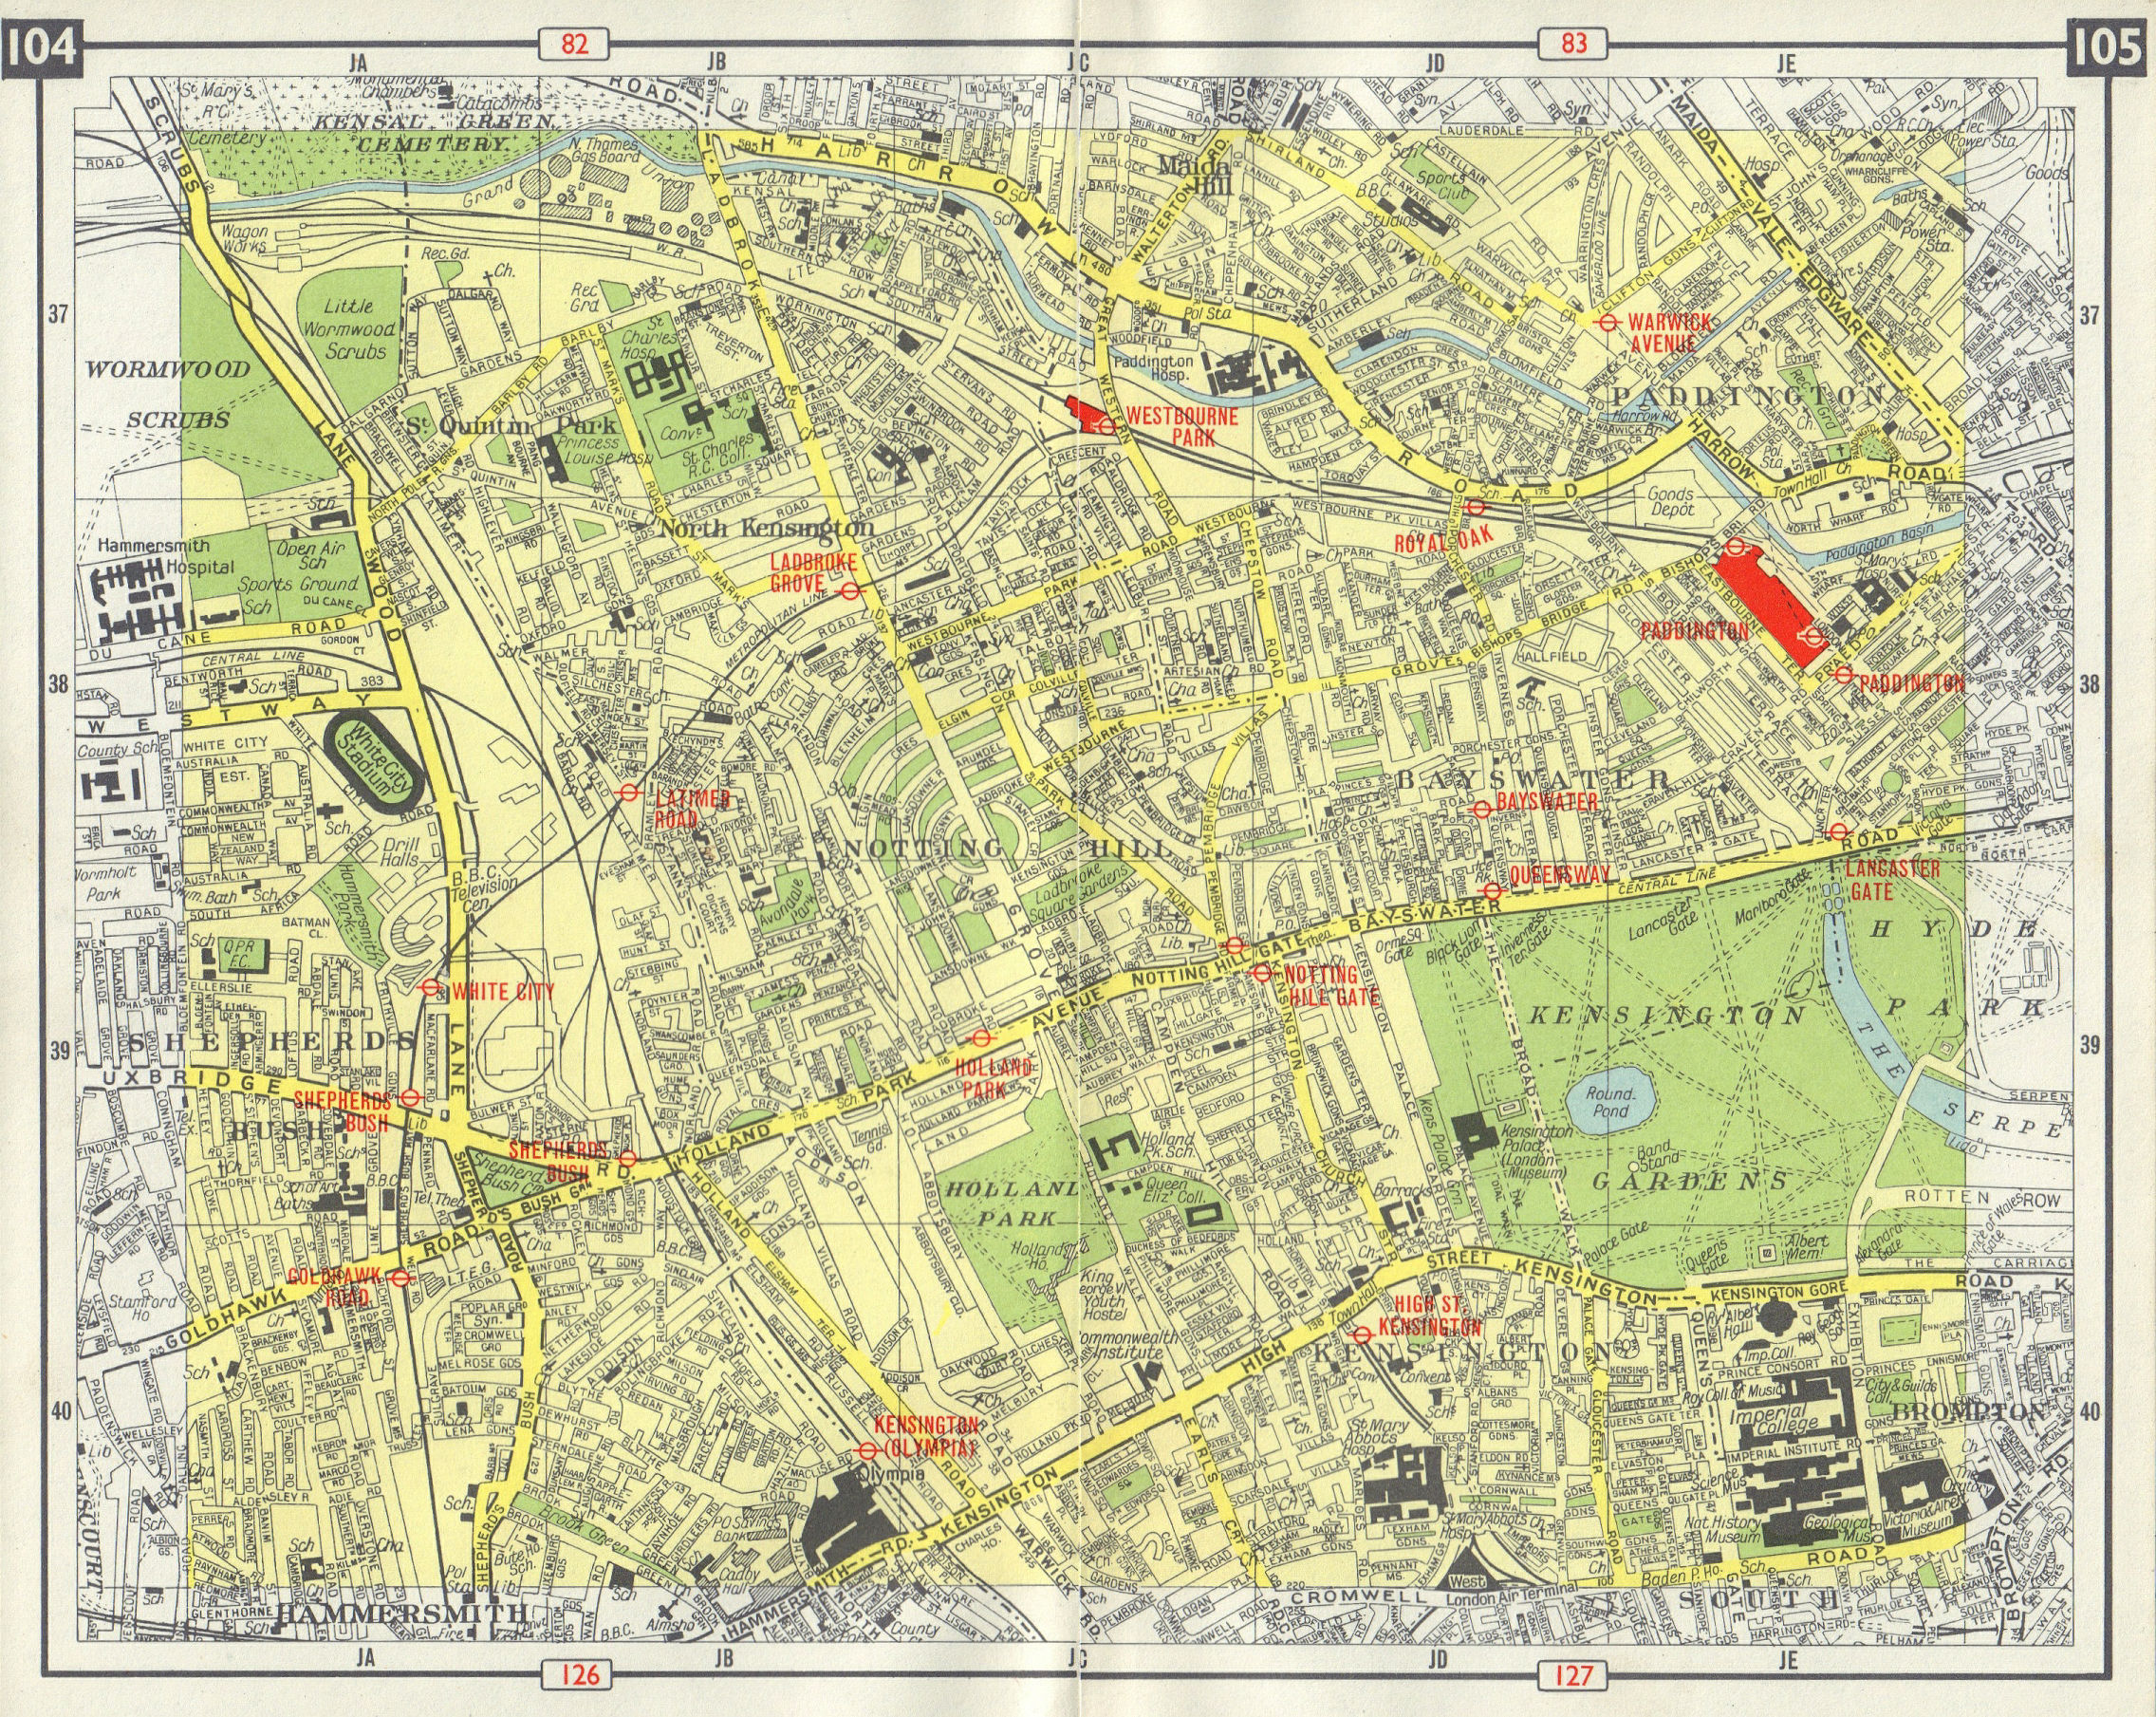 W LONDON Notting Hill Paddington Bayswater Shepherd's Bush Kensington 1965 map